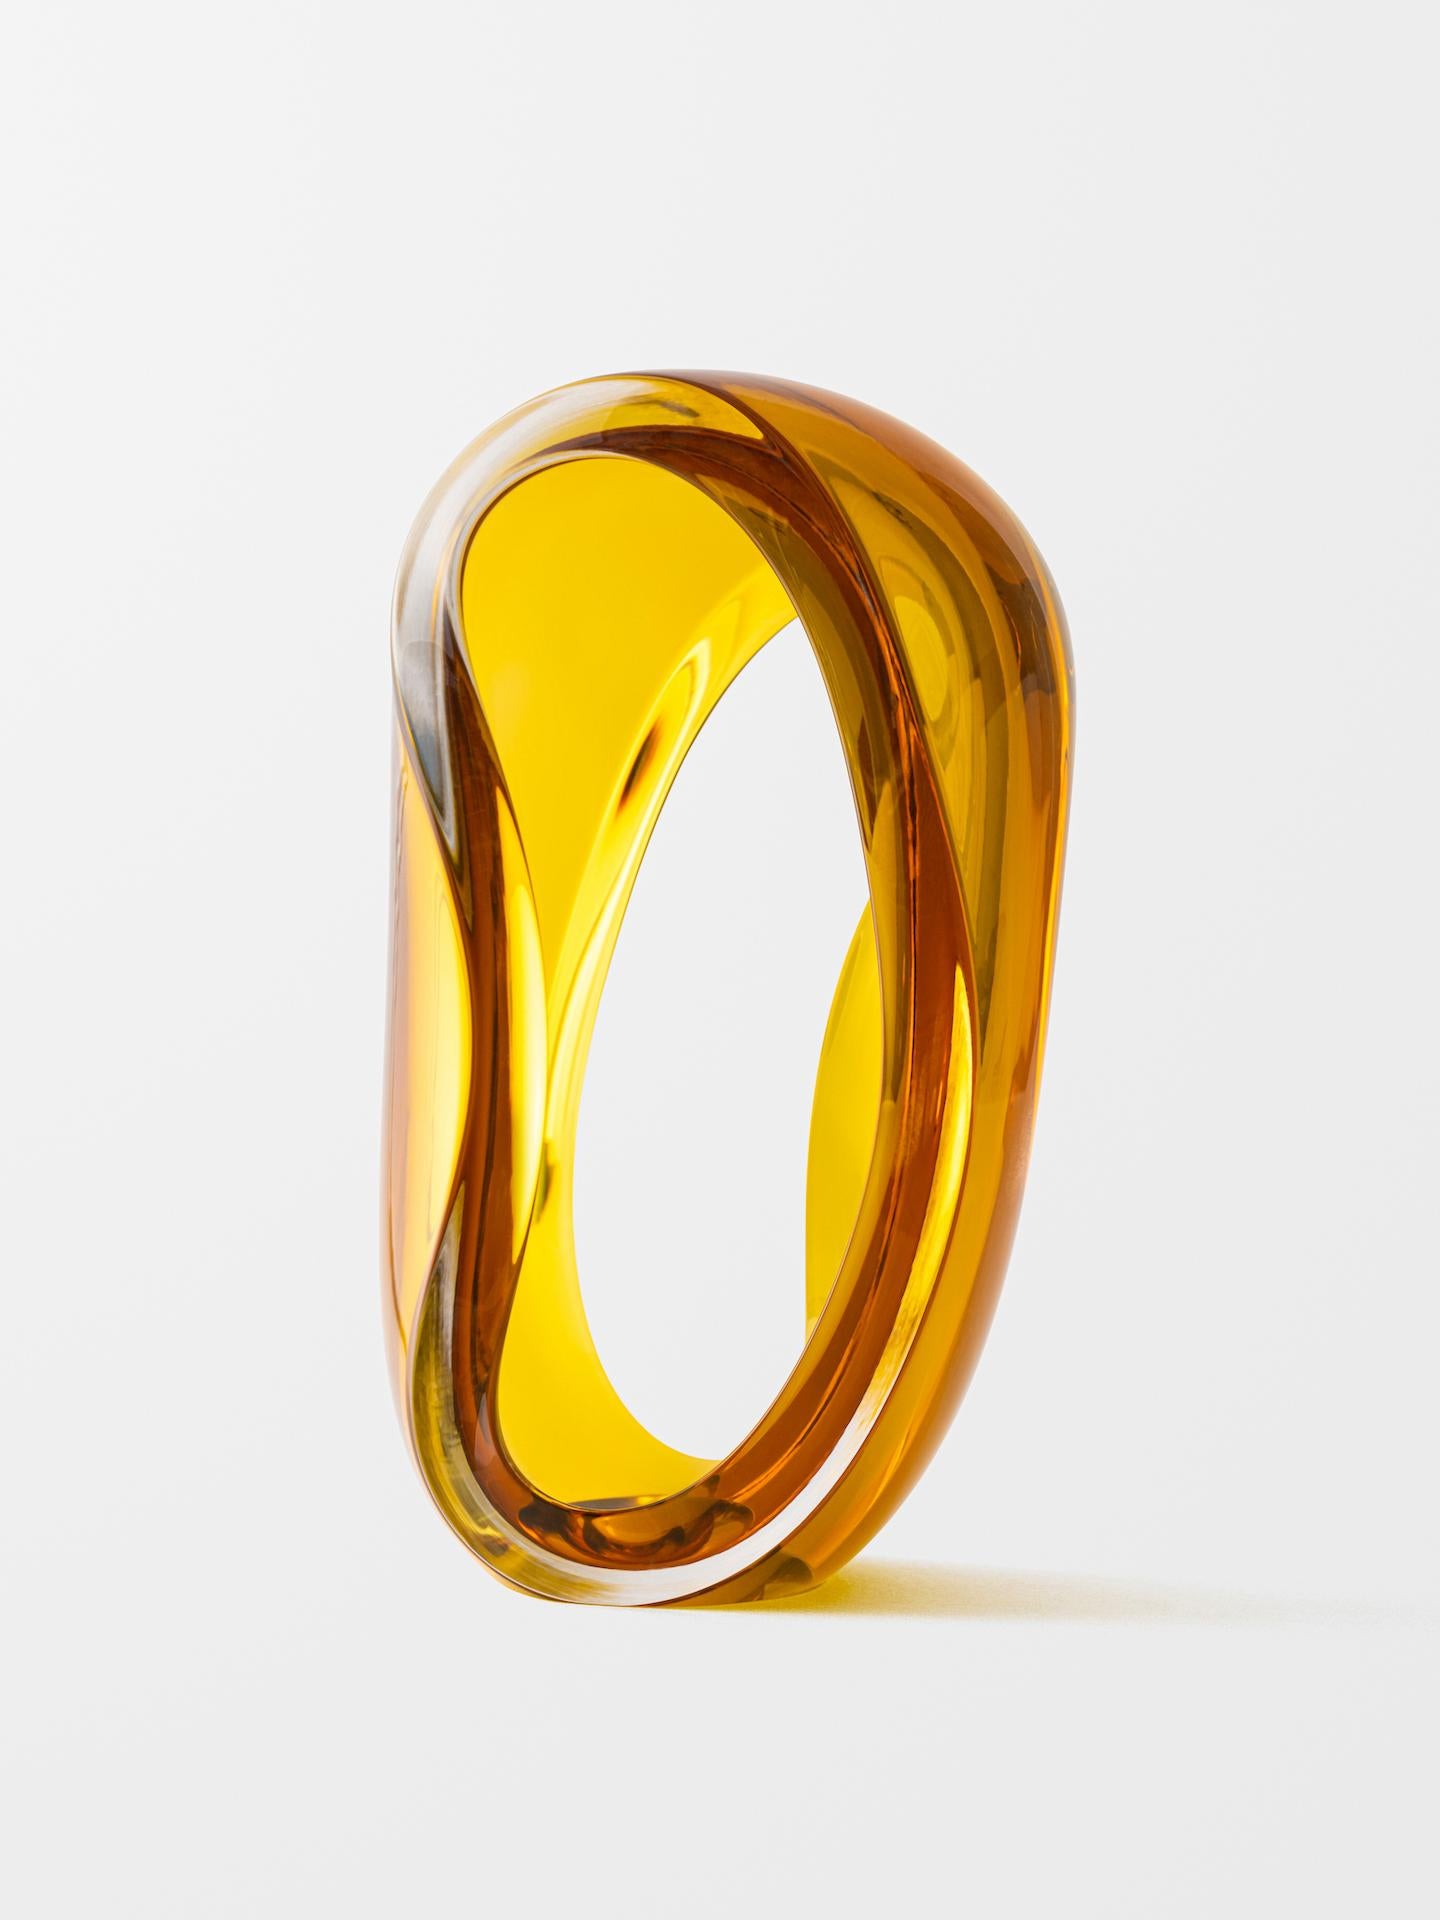 Loops (Gold) - Gray Abstract Sculpture by Jonas Noël Niedermann